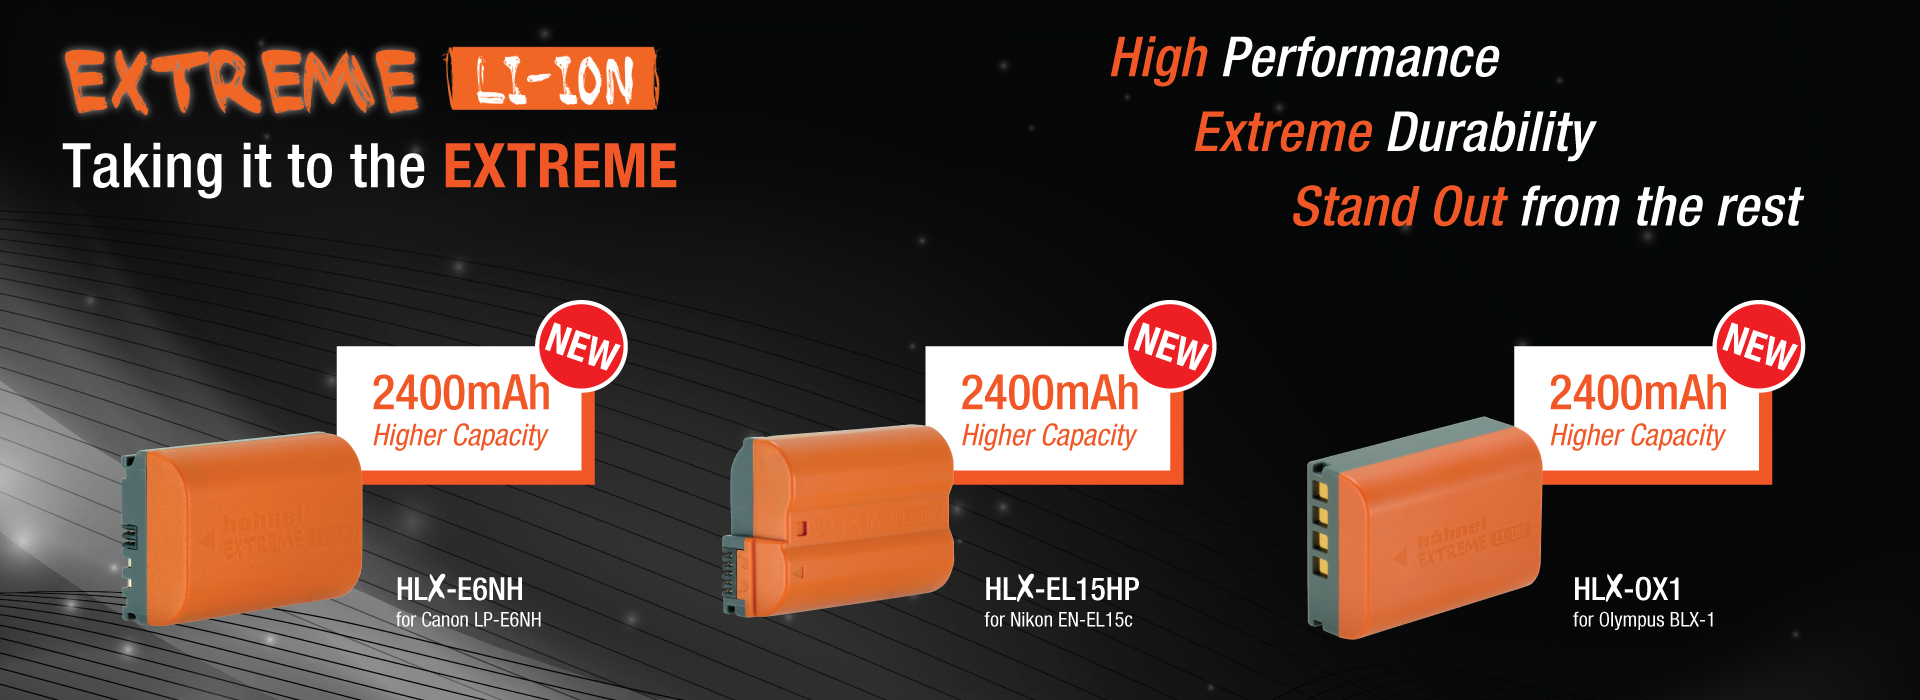 Hahnel Extreme LI-Ion Batteries